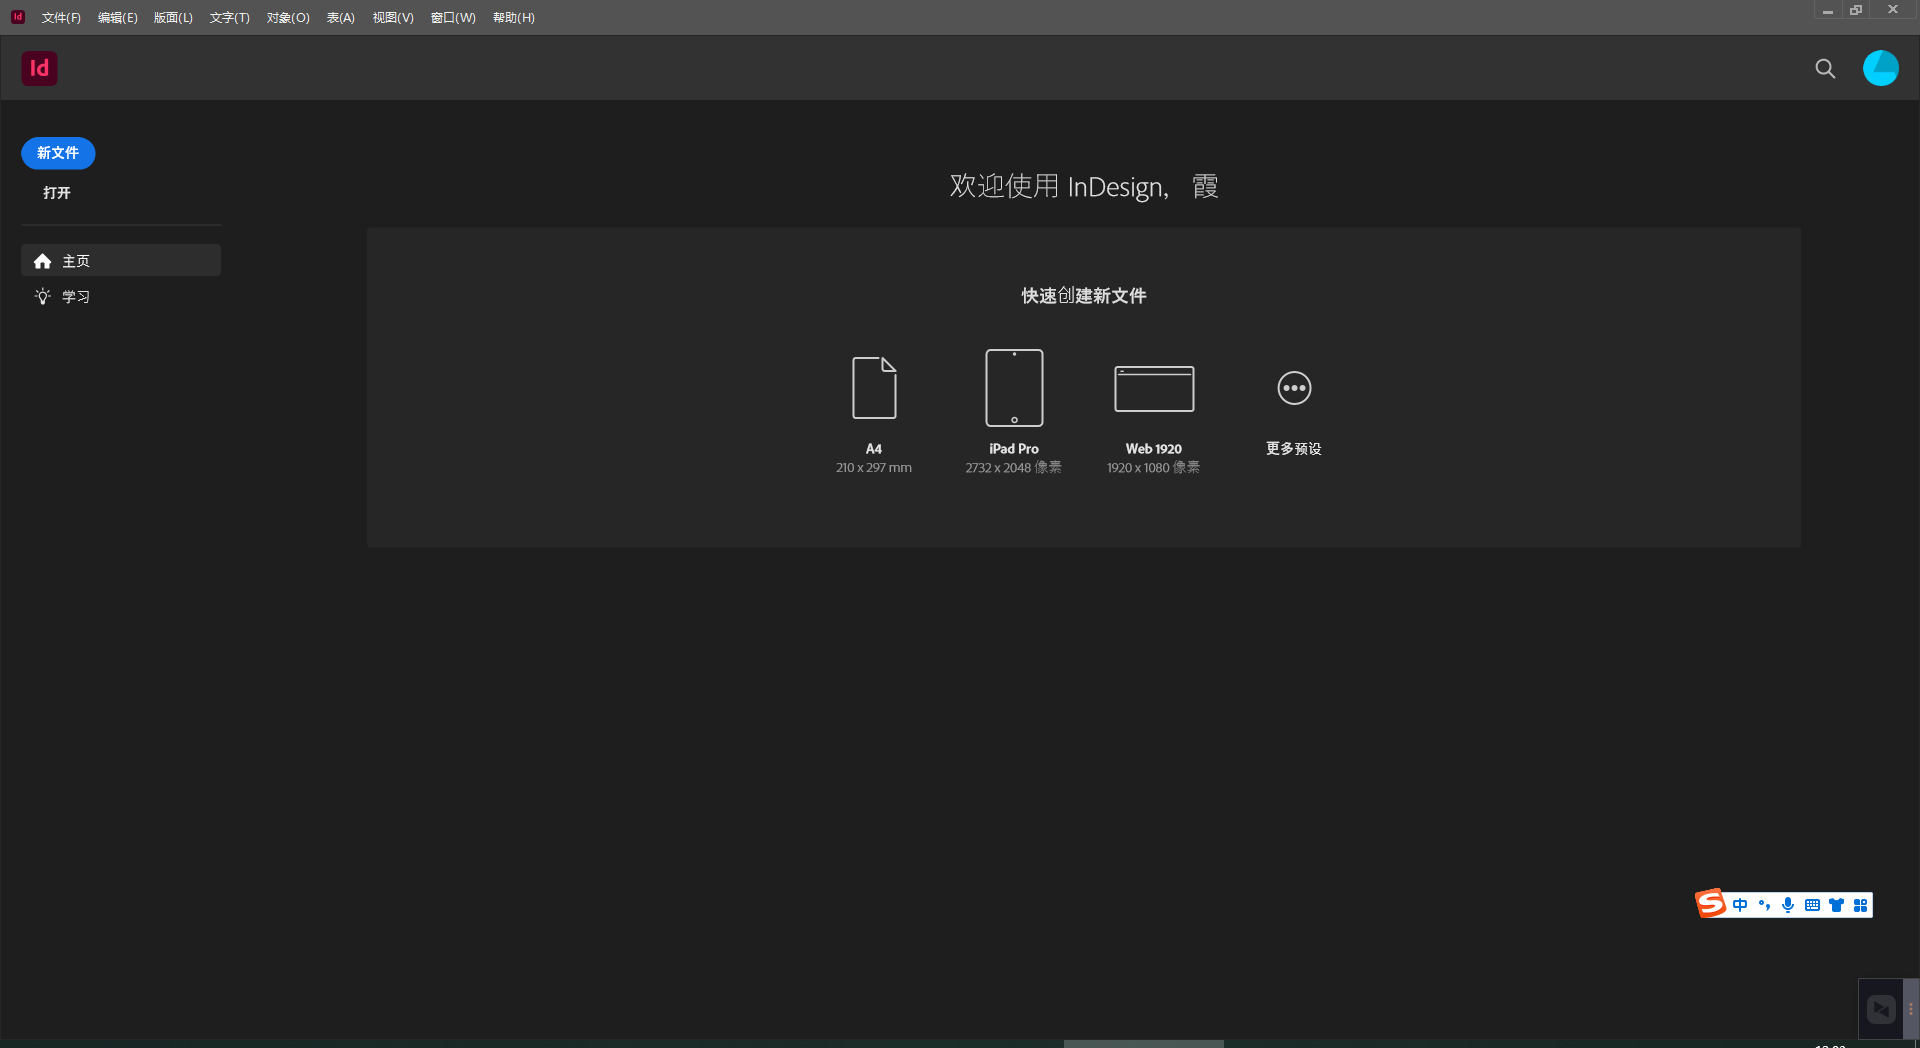 Adobe InDesign 2023 v18.4.0.56 for ios download free